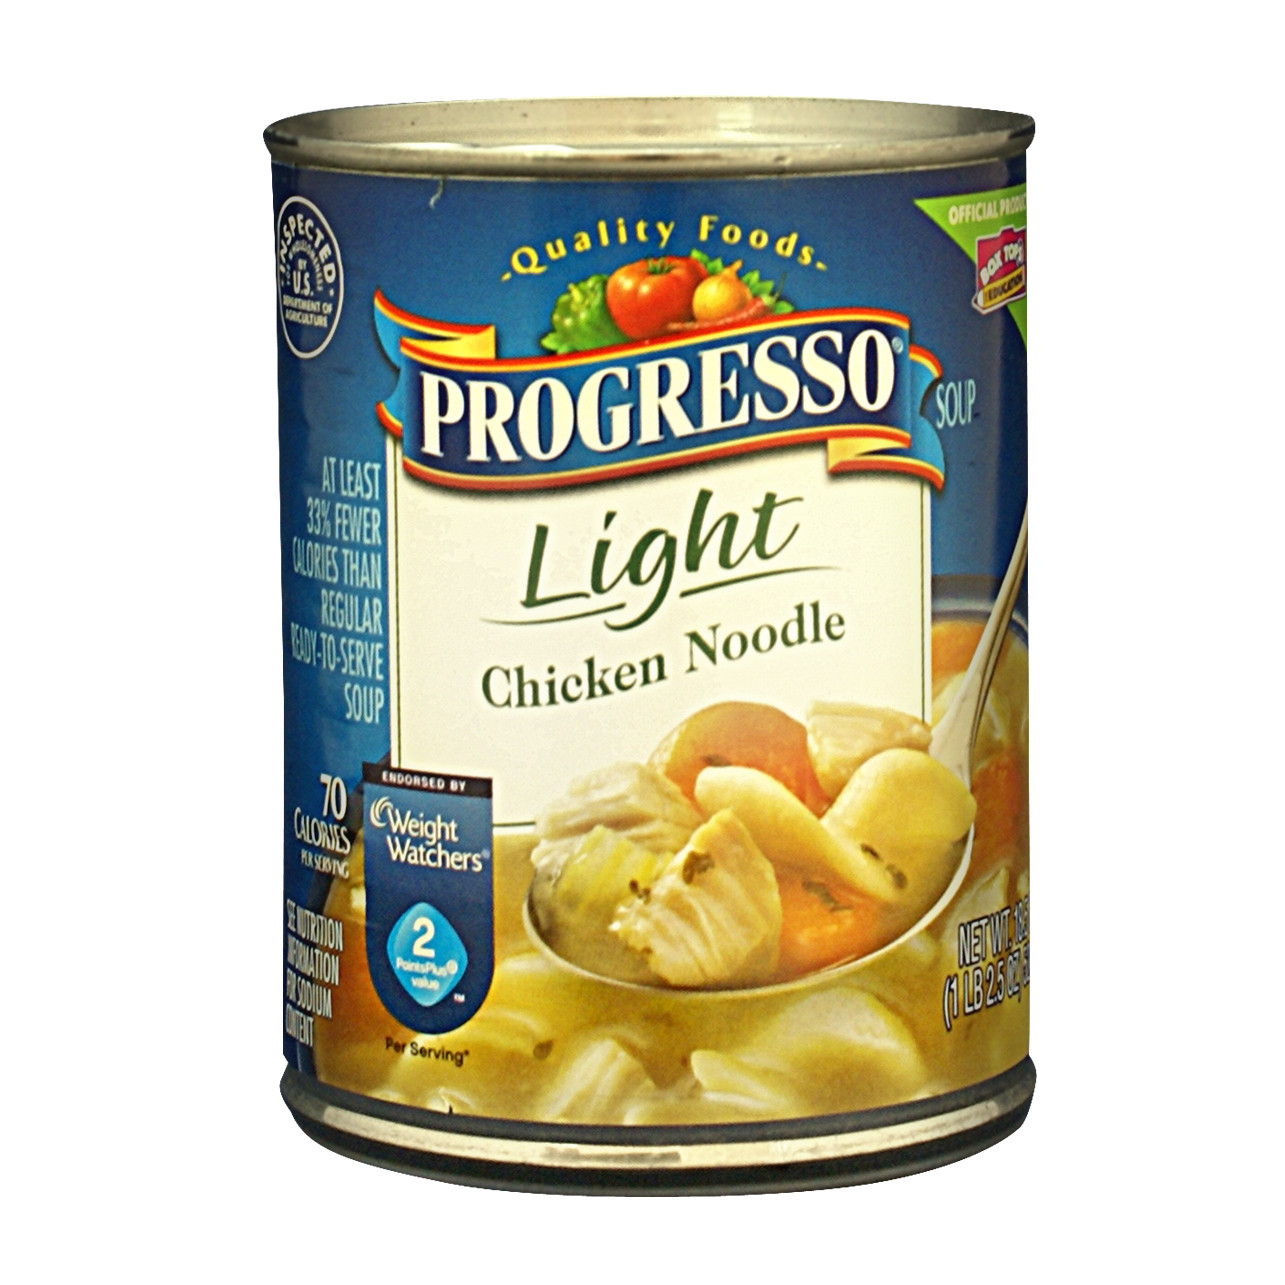 Progresso Chicken Noodle Soup
 CANNED GOODS SOUP PREPARED MEALS Progresso Light